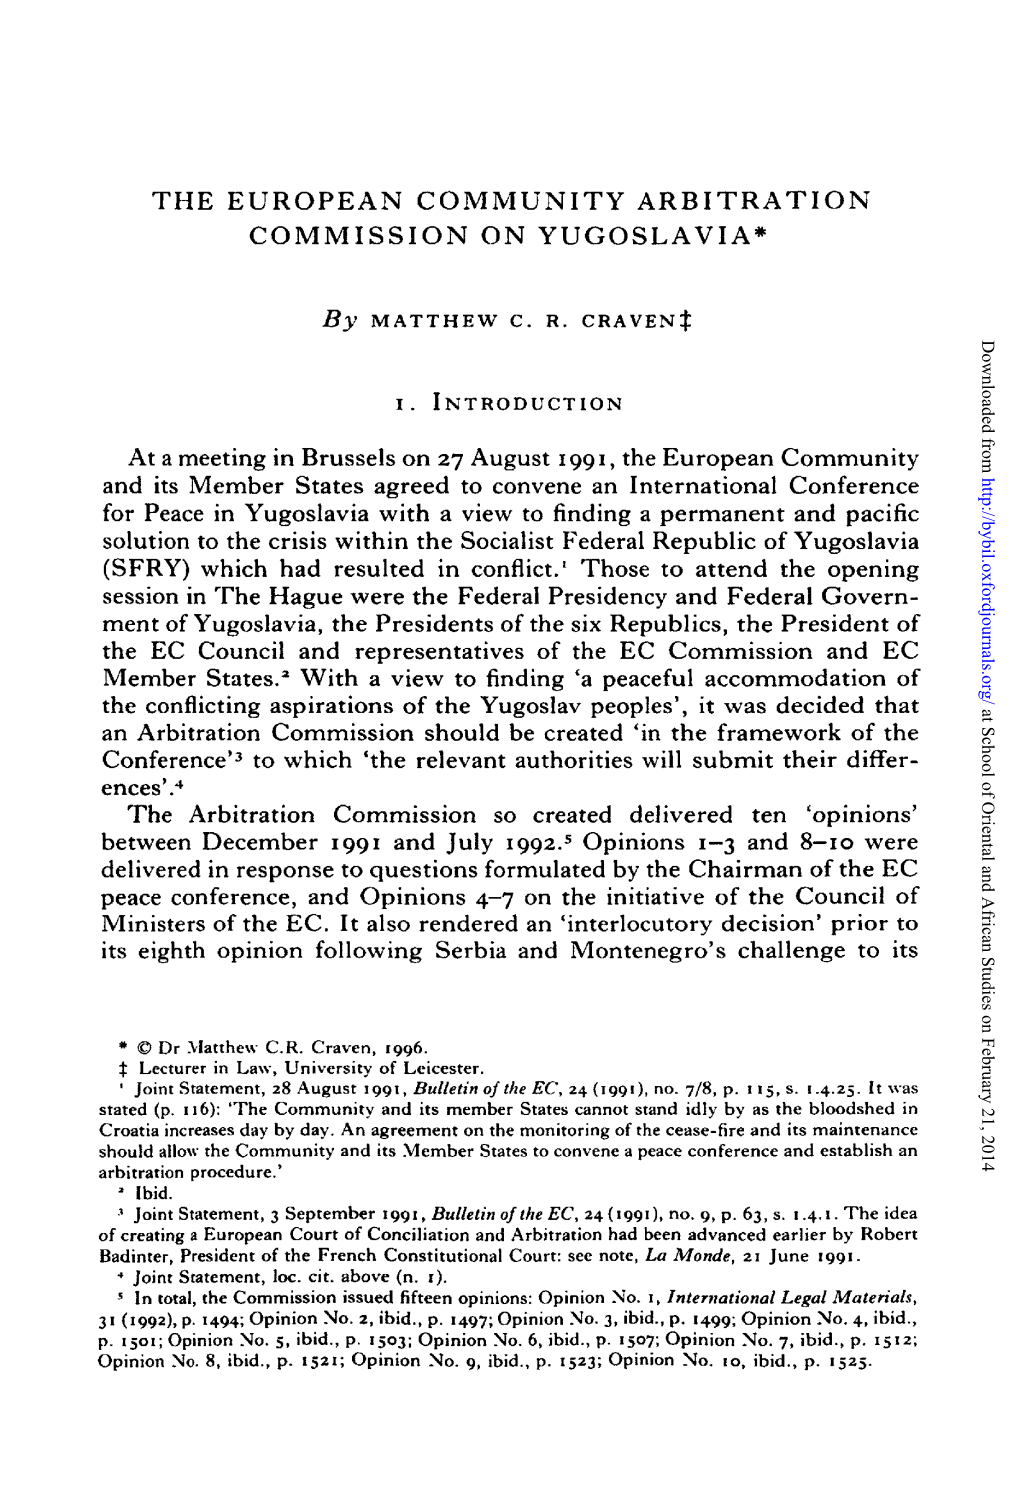 The European Community Arbitration Commission on Yugoslavia""